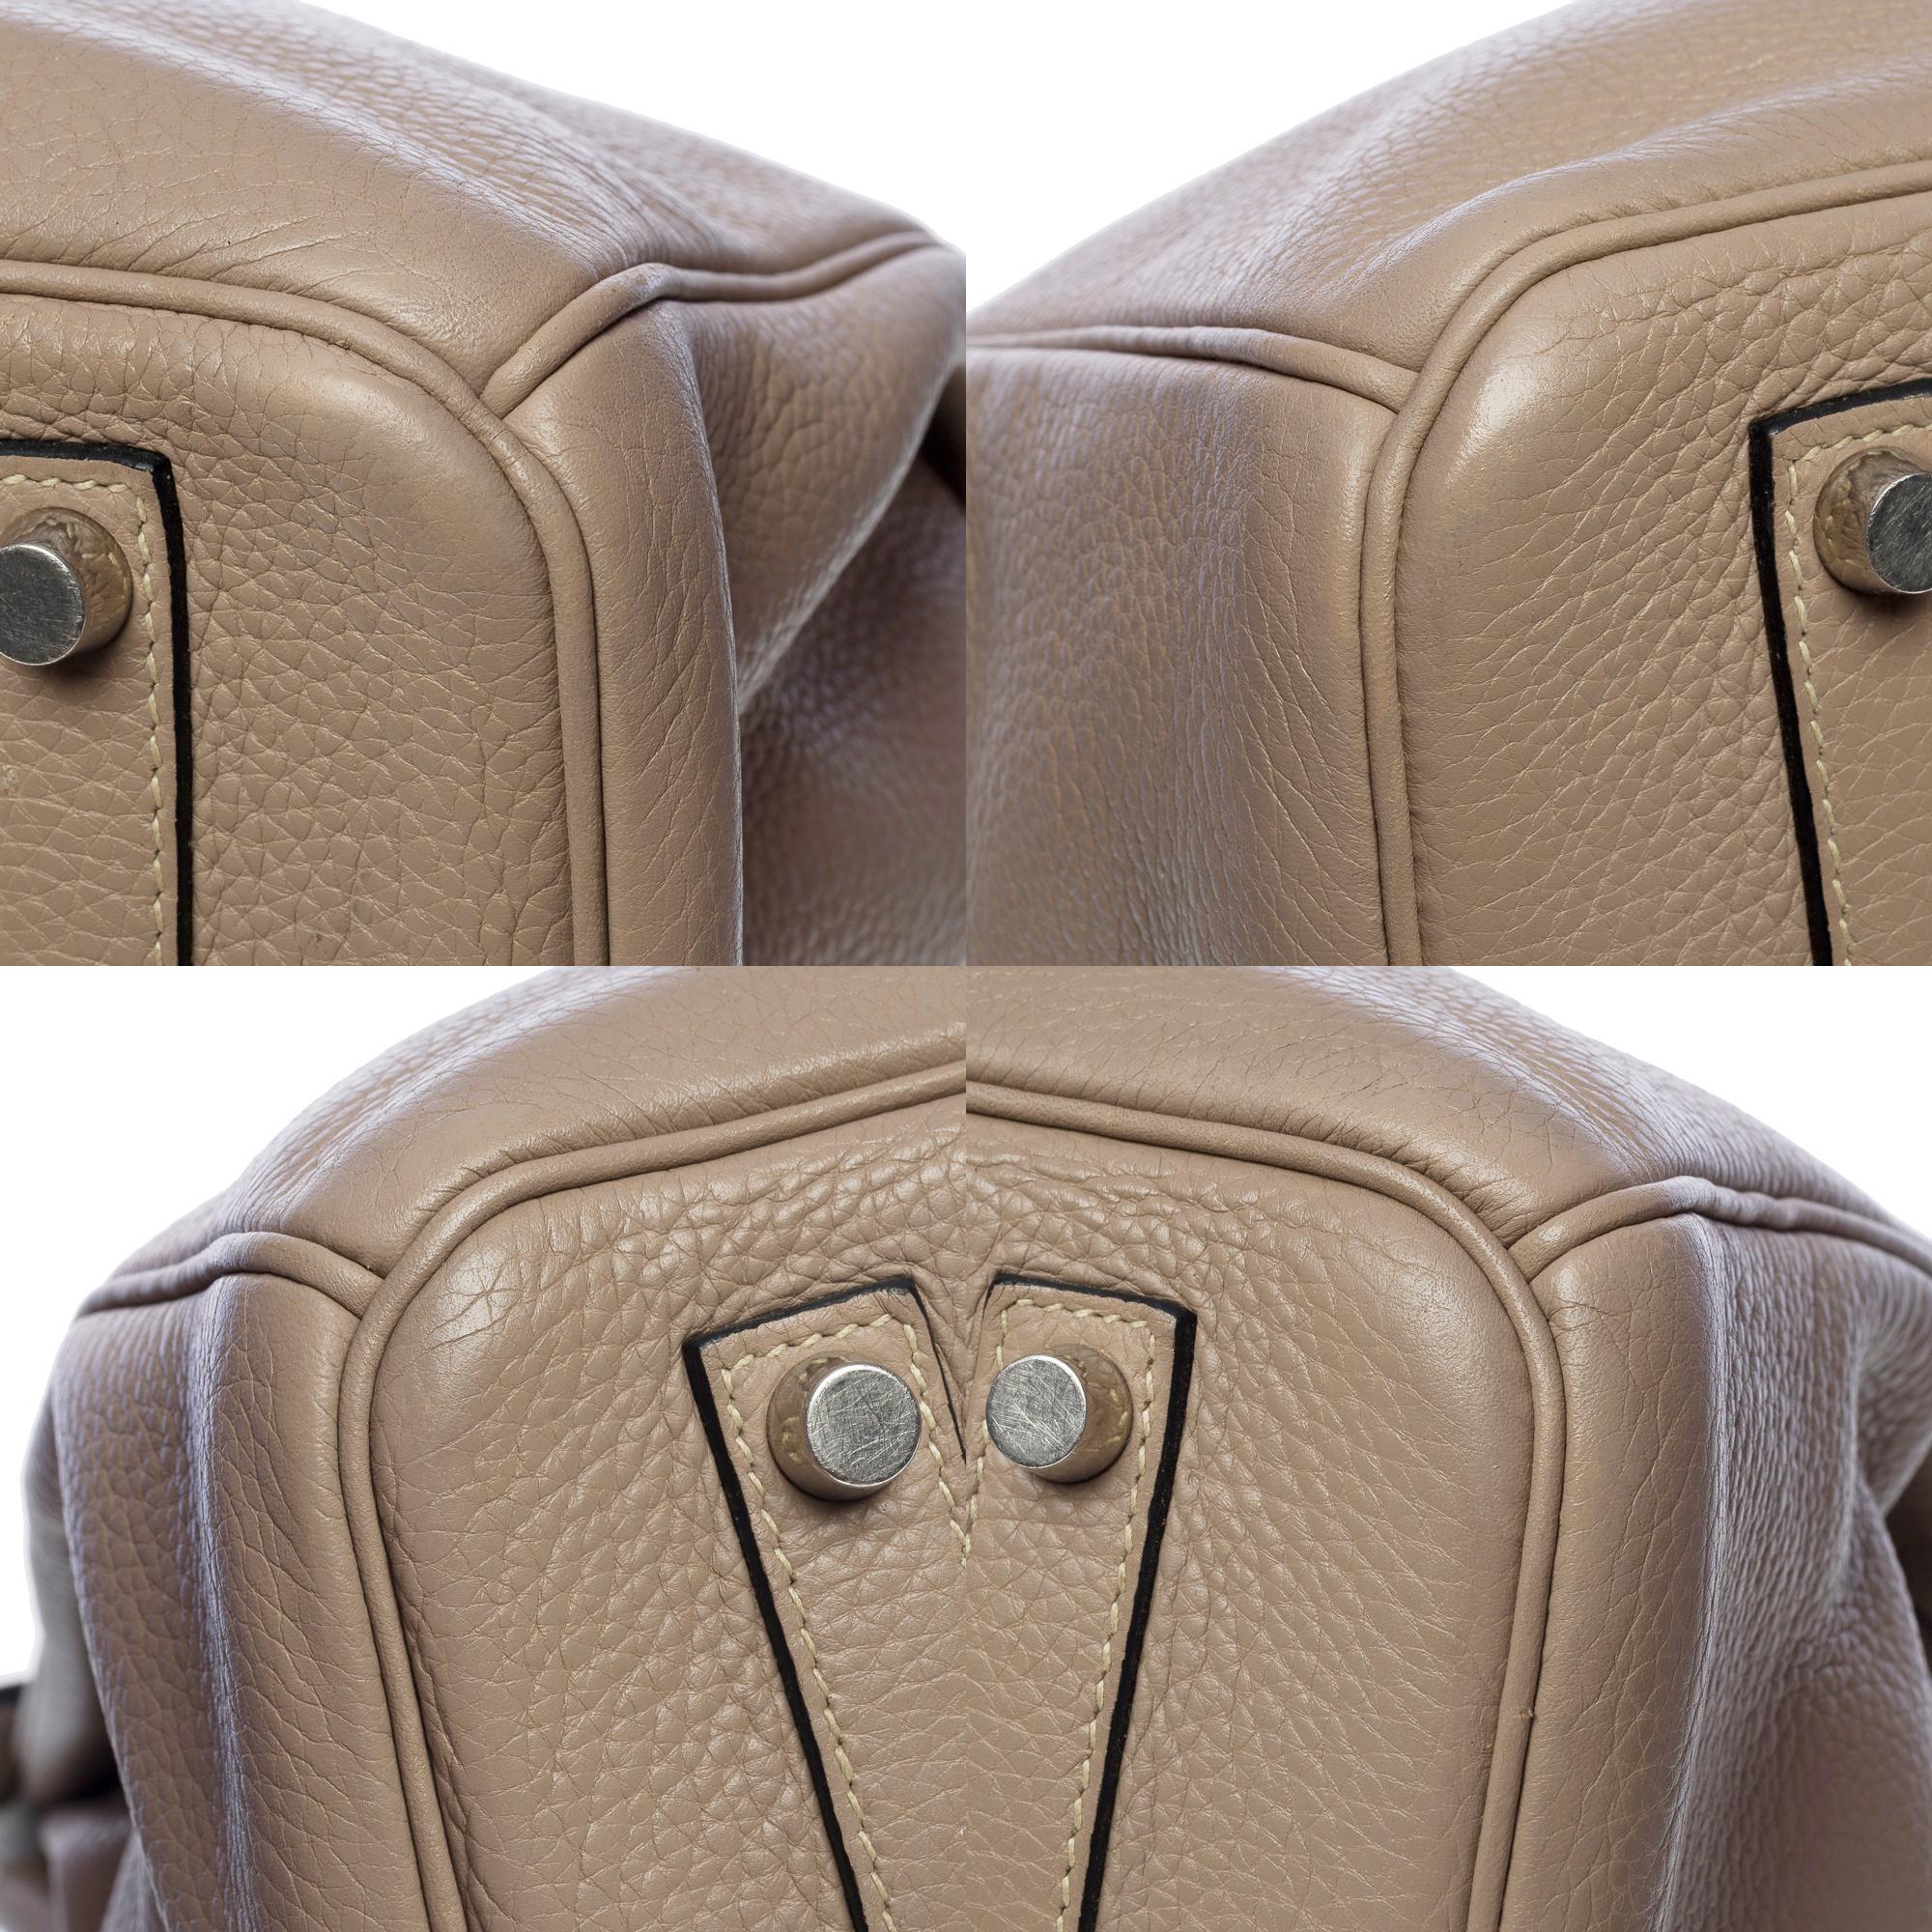 Superb Hermes Birkin 35 cm handbag in dove gray Togo leather, SHW 4